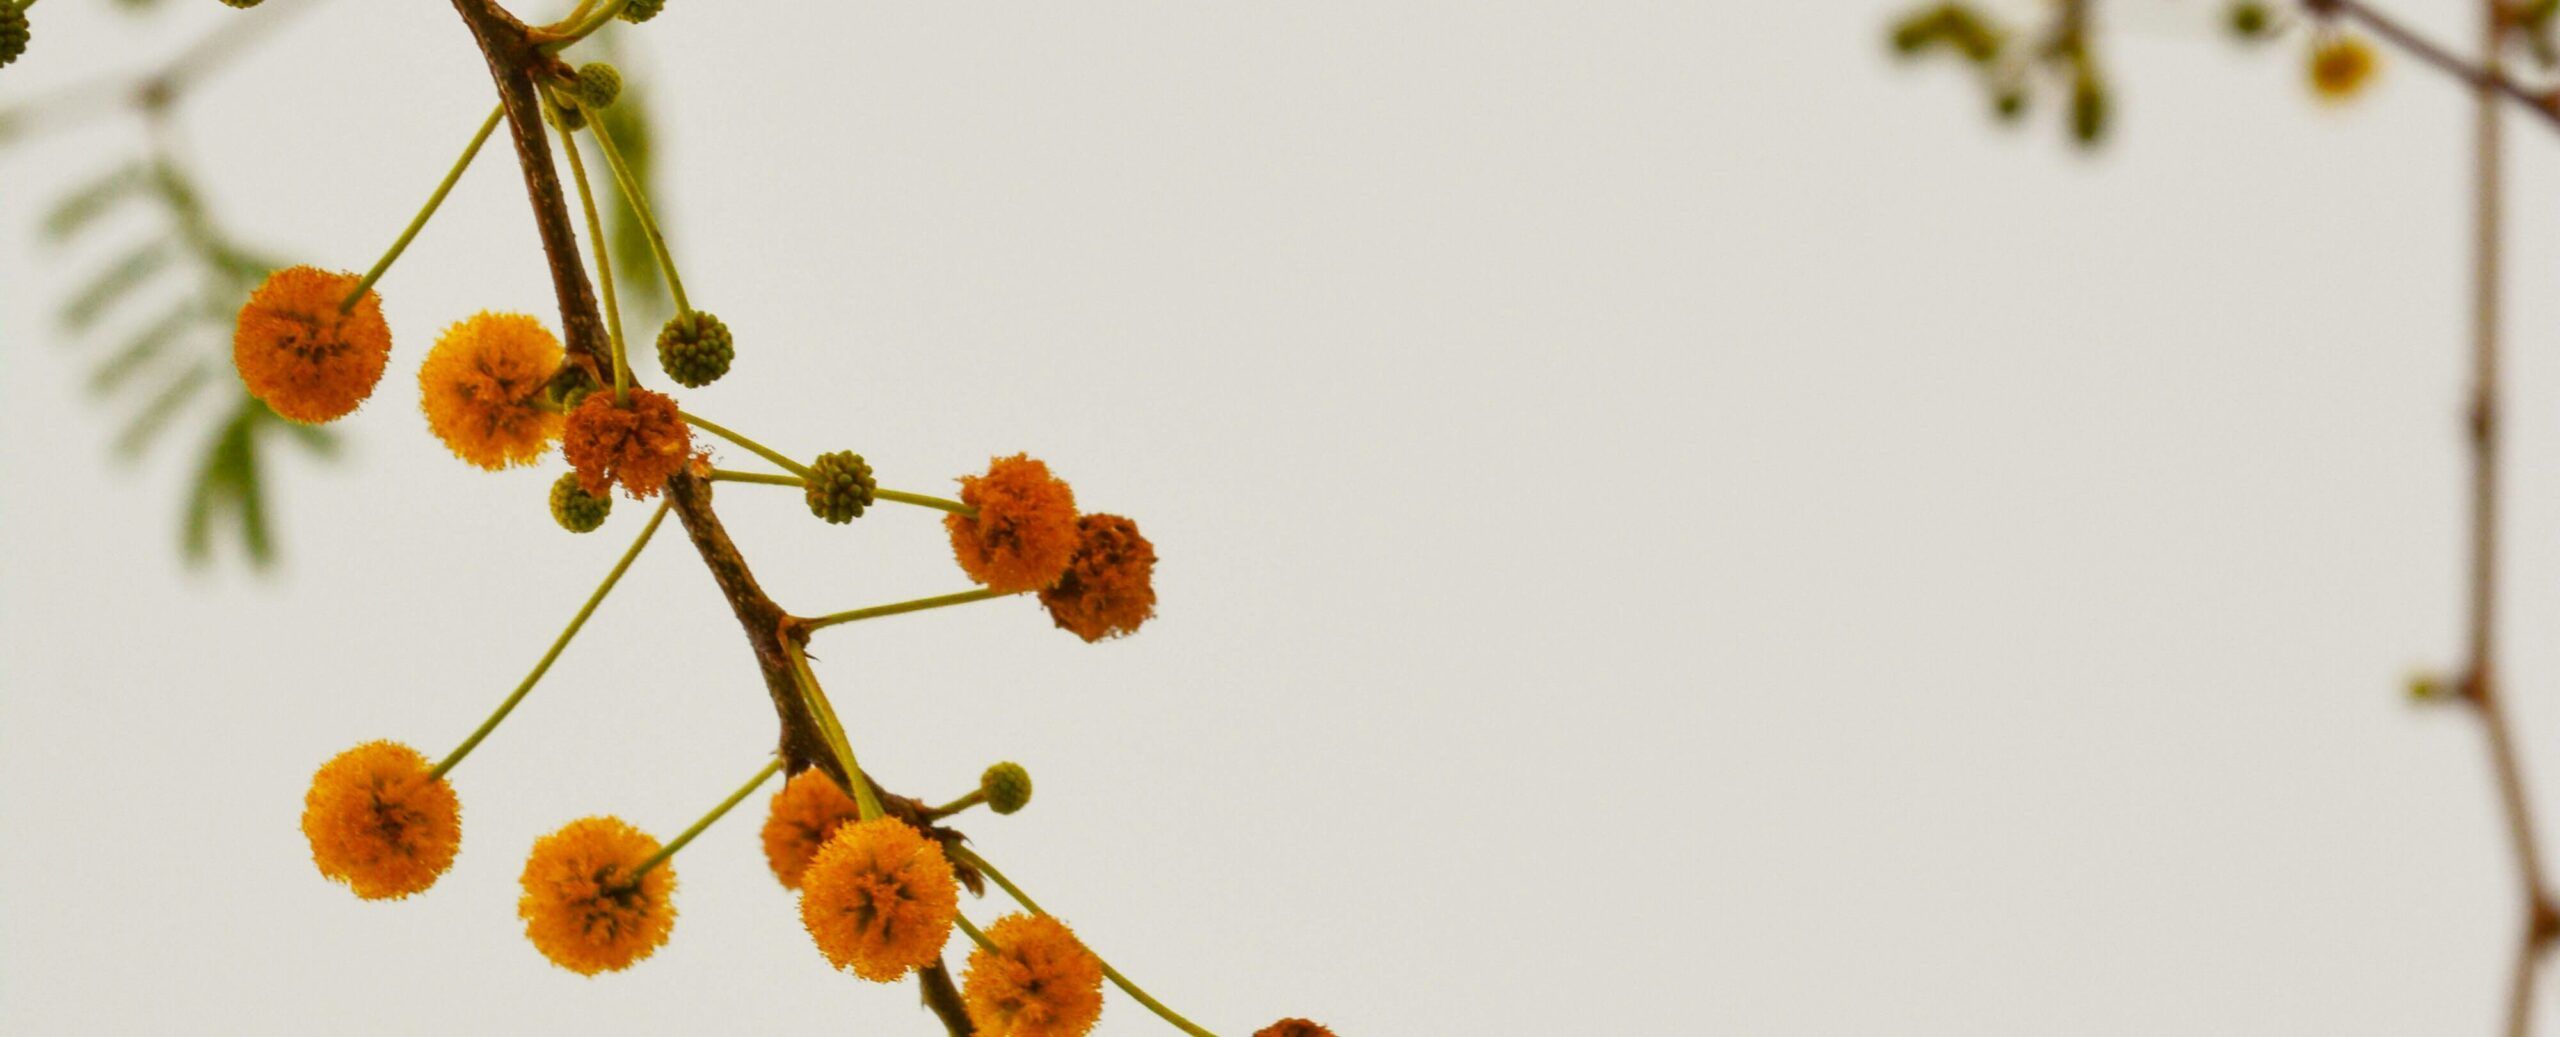 sparse twig with orange flowers